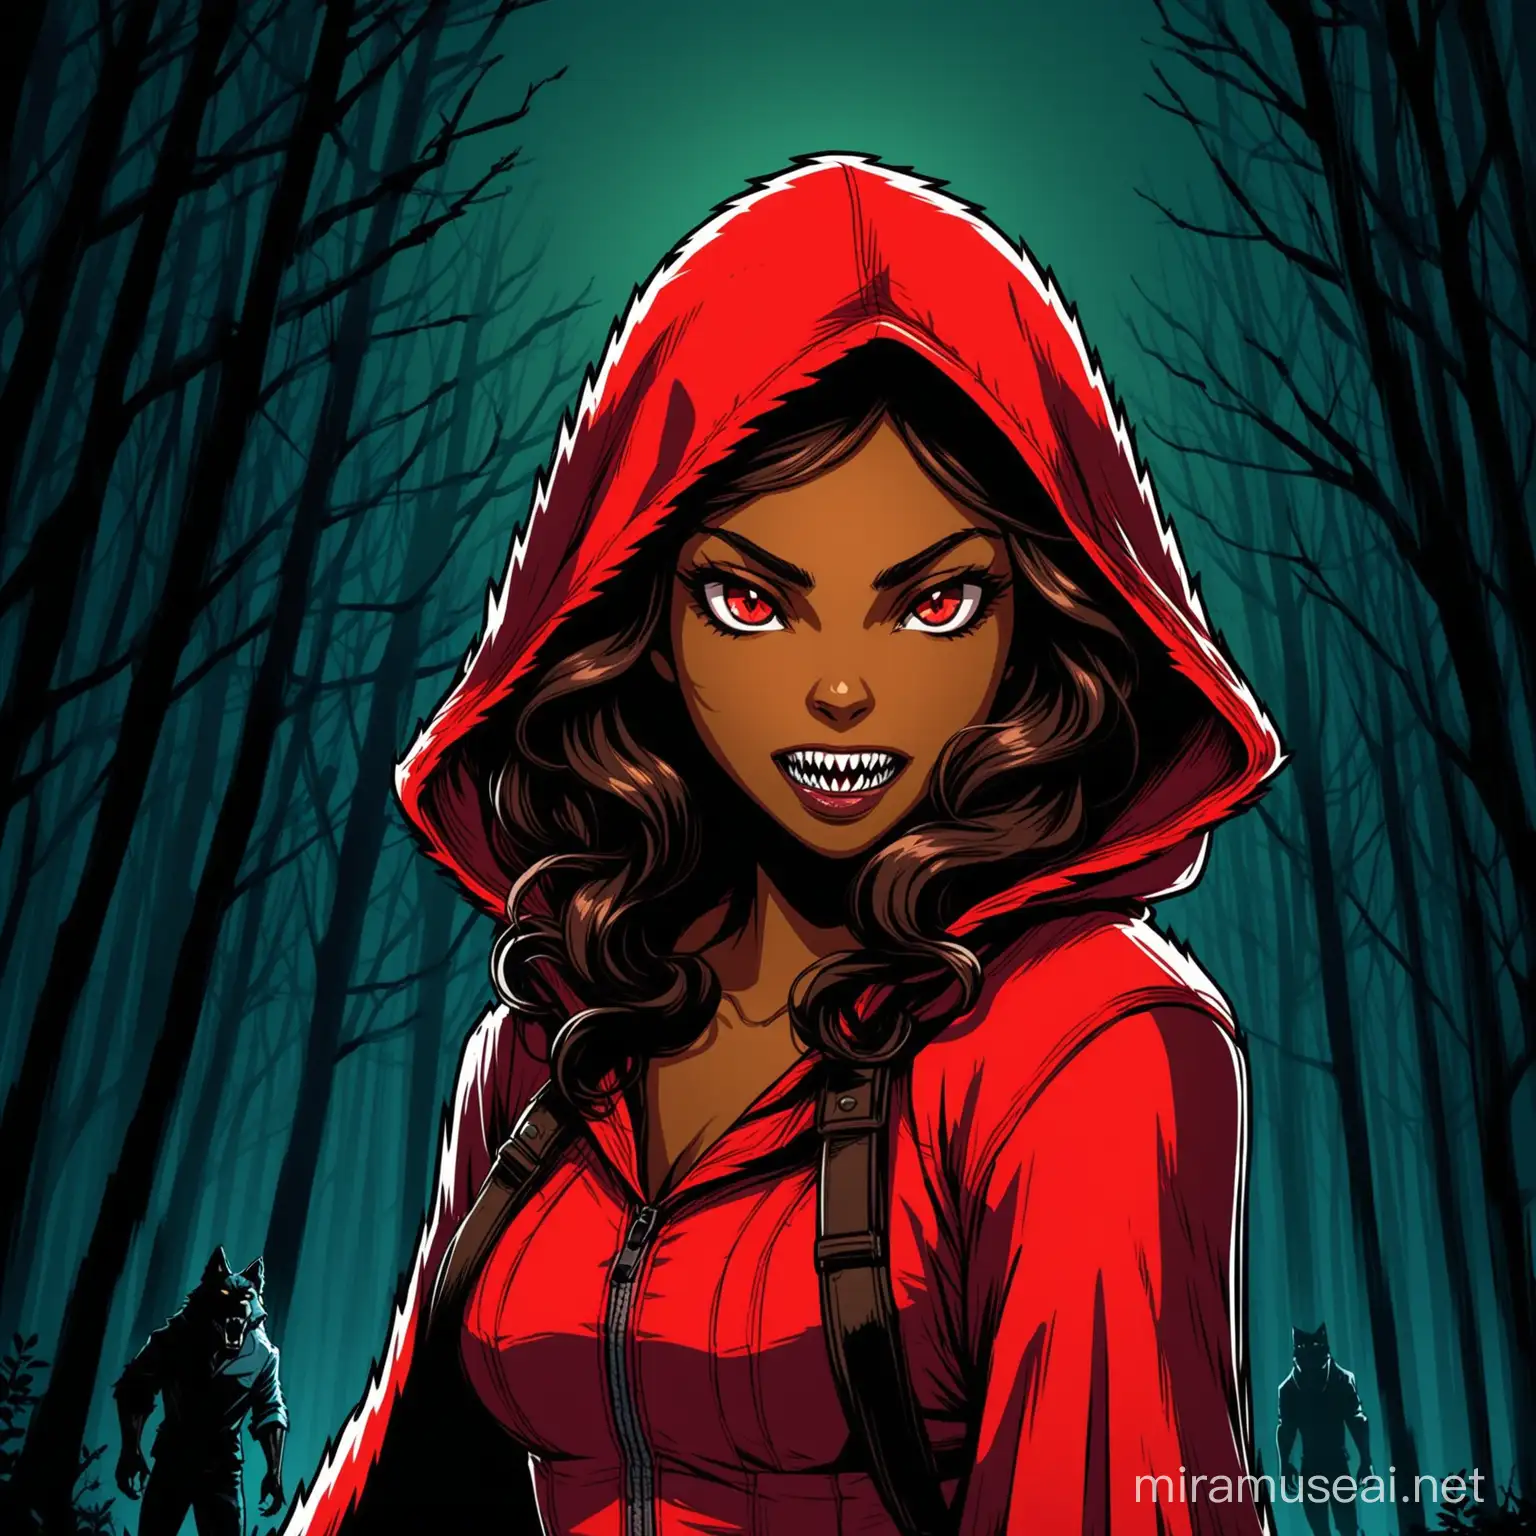 Black Girl Werewolf Hybrid in NeoNoir Red Riding Hood Attire Video Game Poster